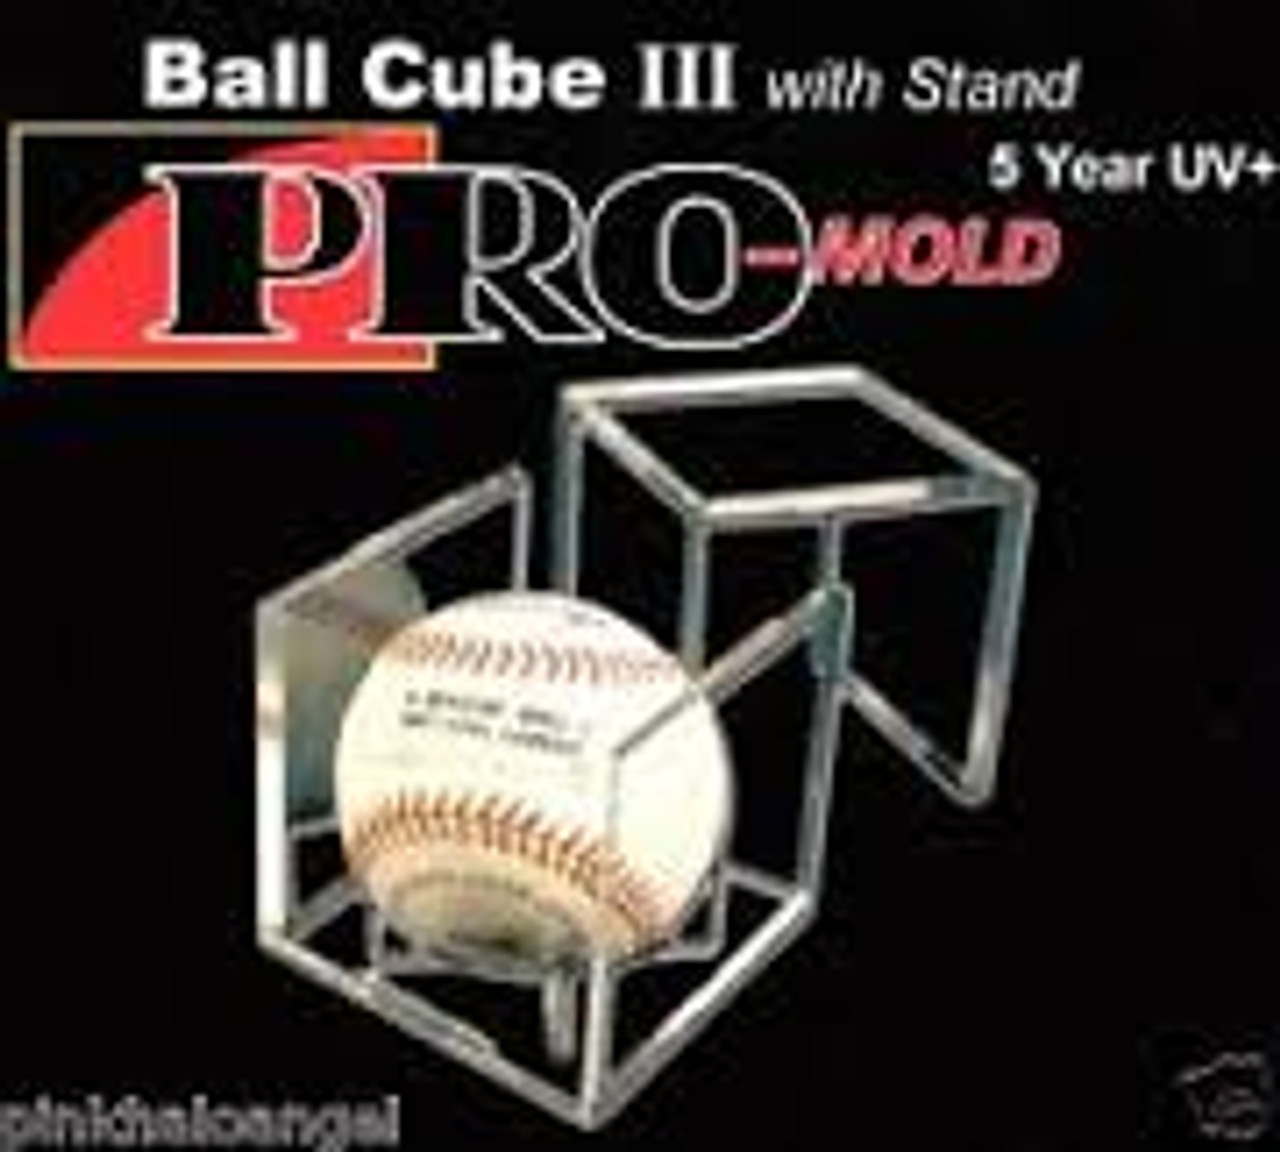 Pro-Mold Baseball Cube Pedestal 5-Year UV / Case of 36